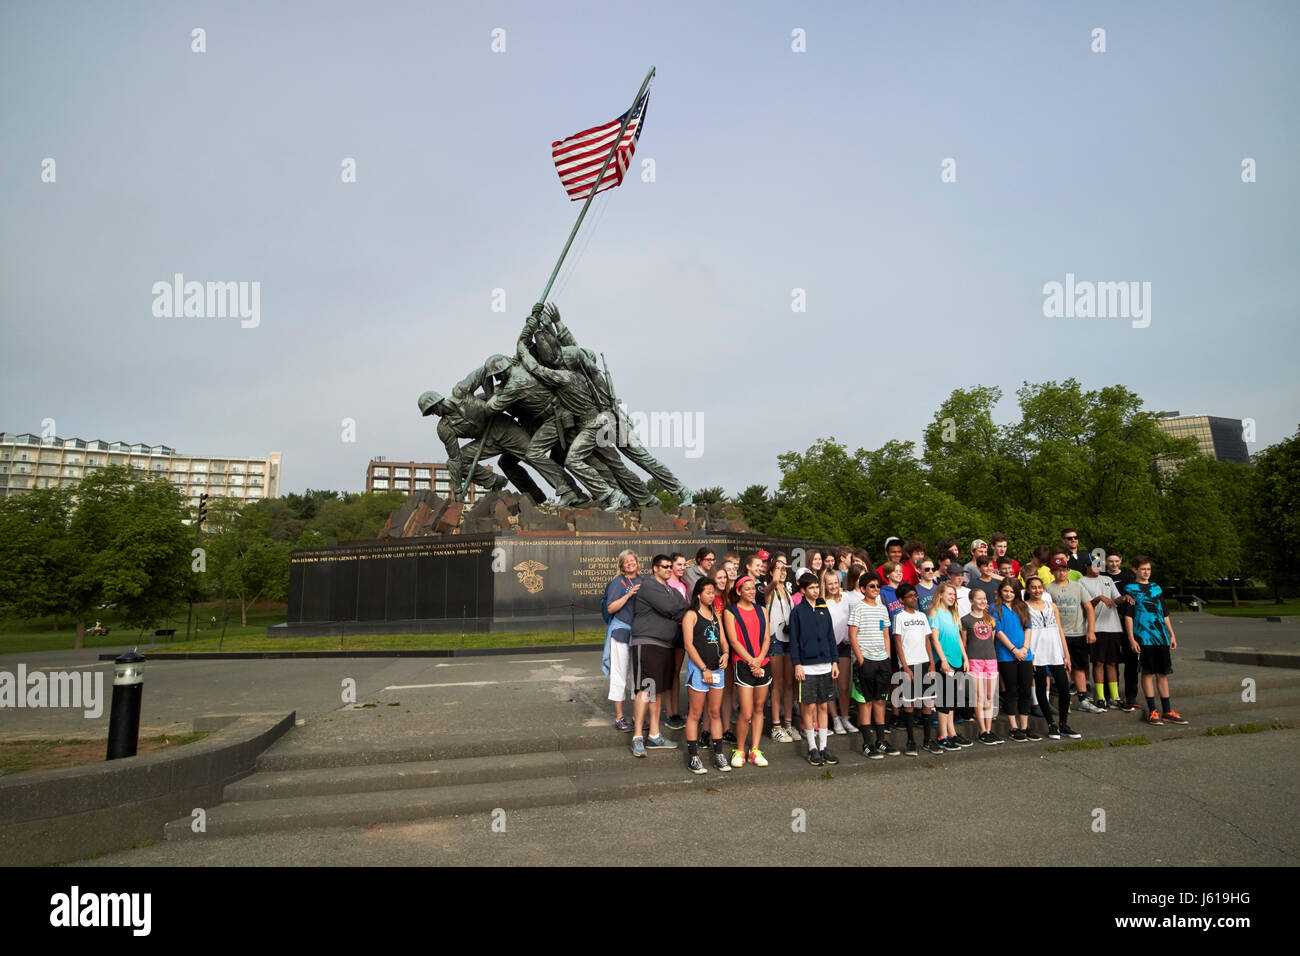 Schule Tour Gruppe Pose für Fotos in den Vereinigte Staaten Marinekorps Krieg Iwo Jima Denkmal Washington DC USA Stockfoto